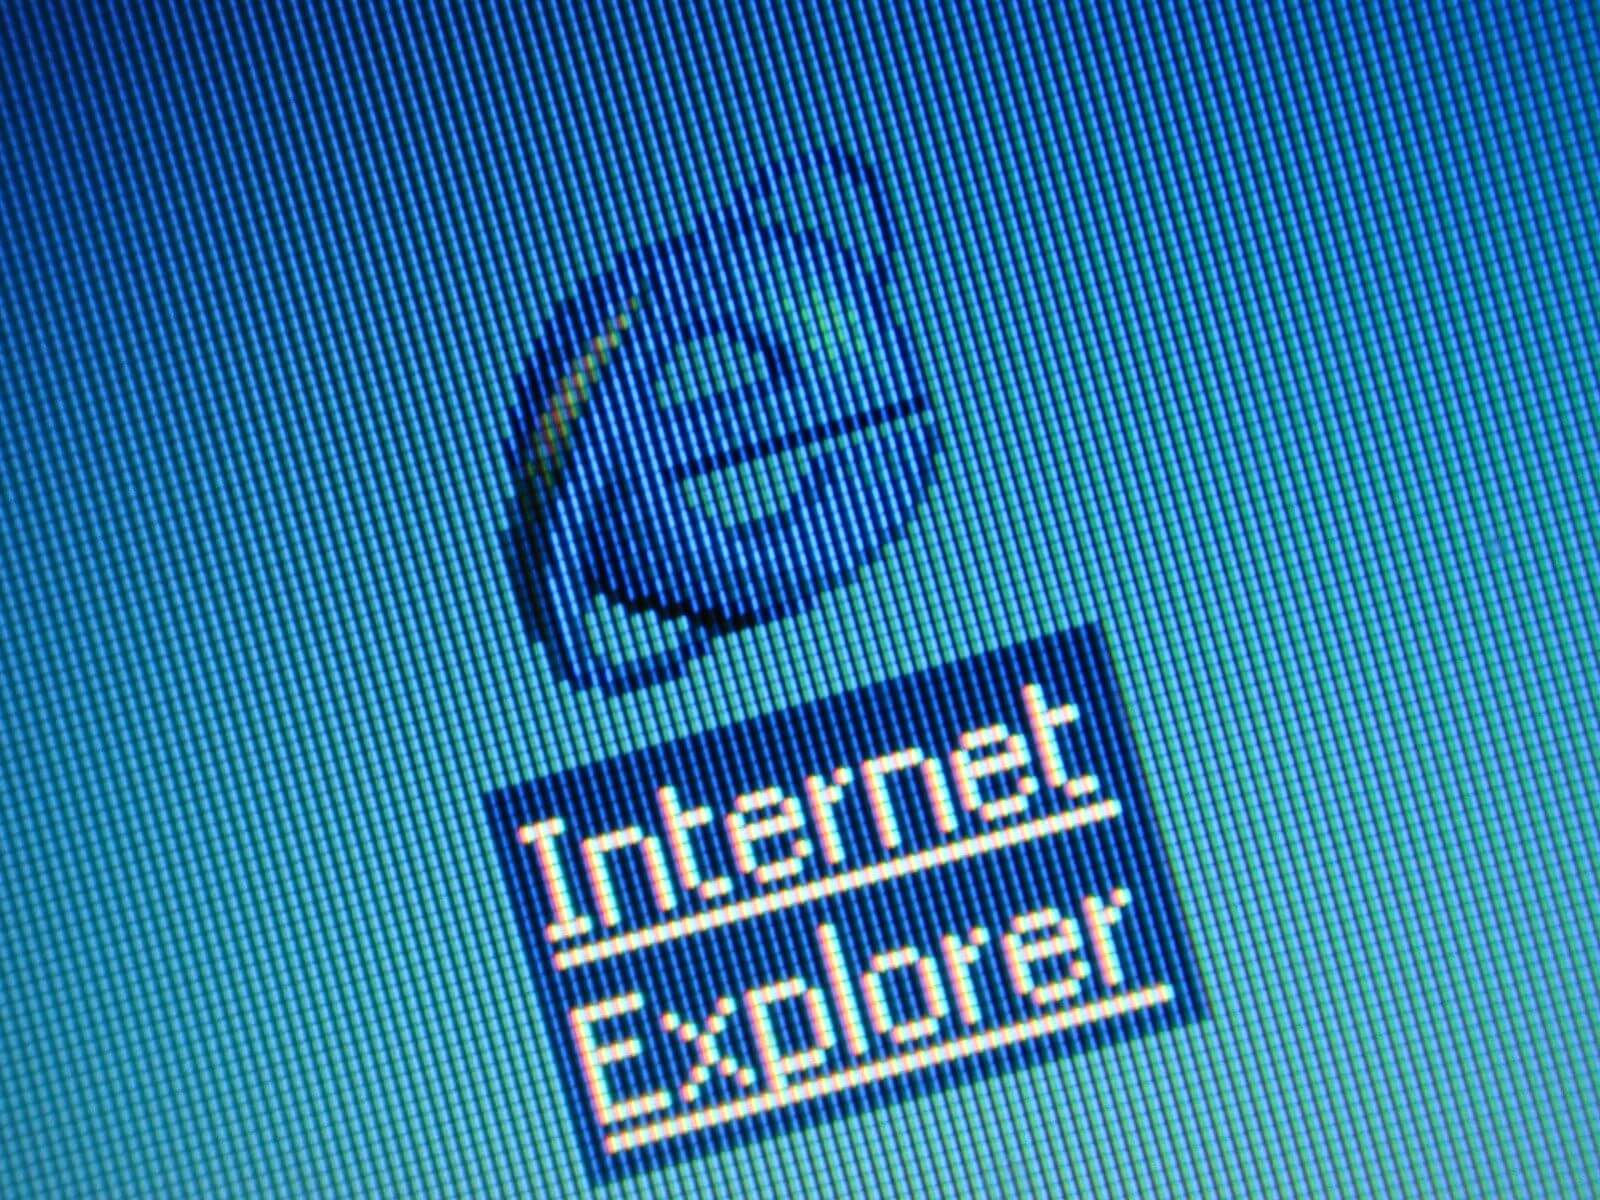 Testing in Internet Explorer